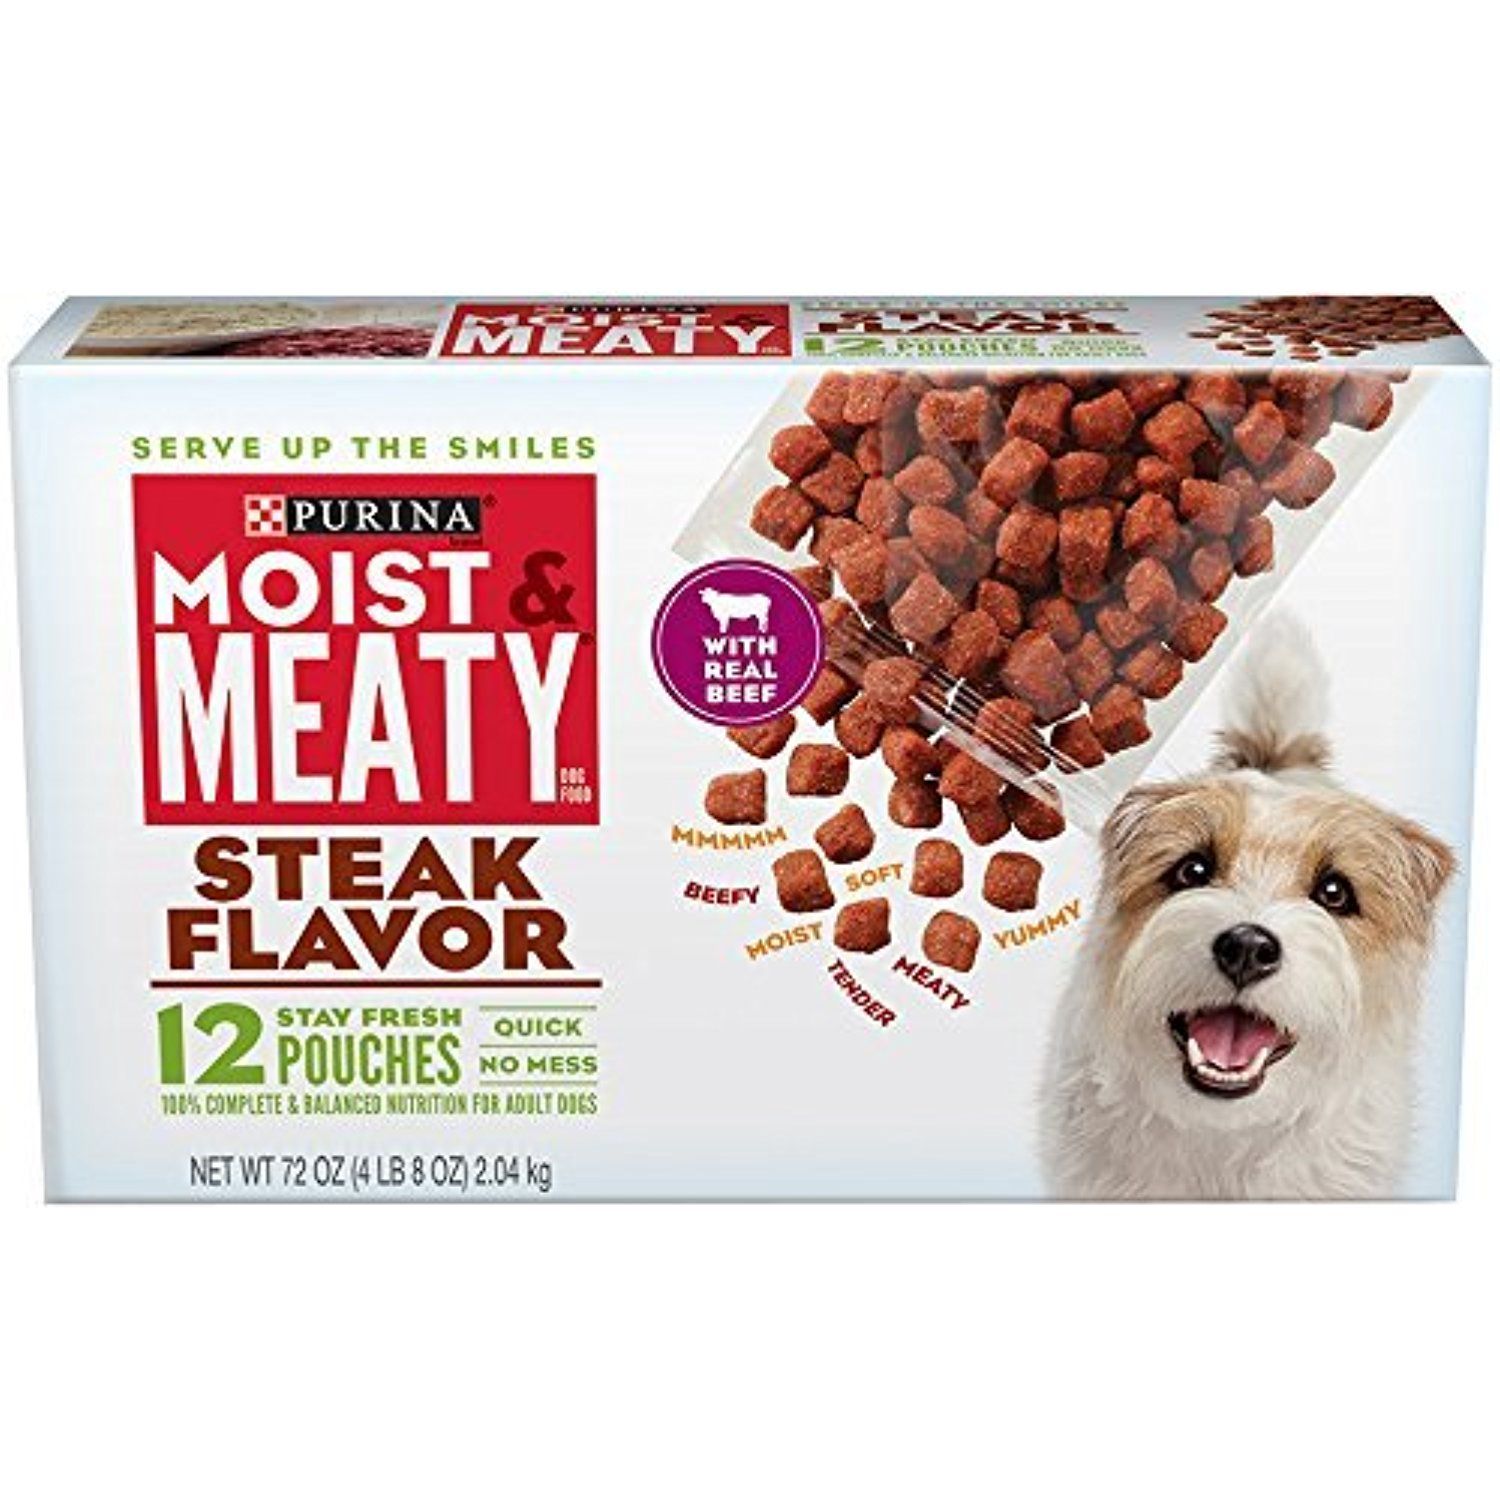 Purina Moist &  Meaty Steak Flavor Dog Food 12 Stay Fresh Pouches